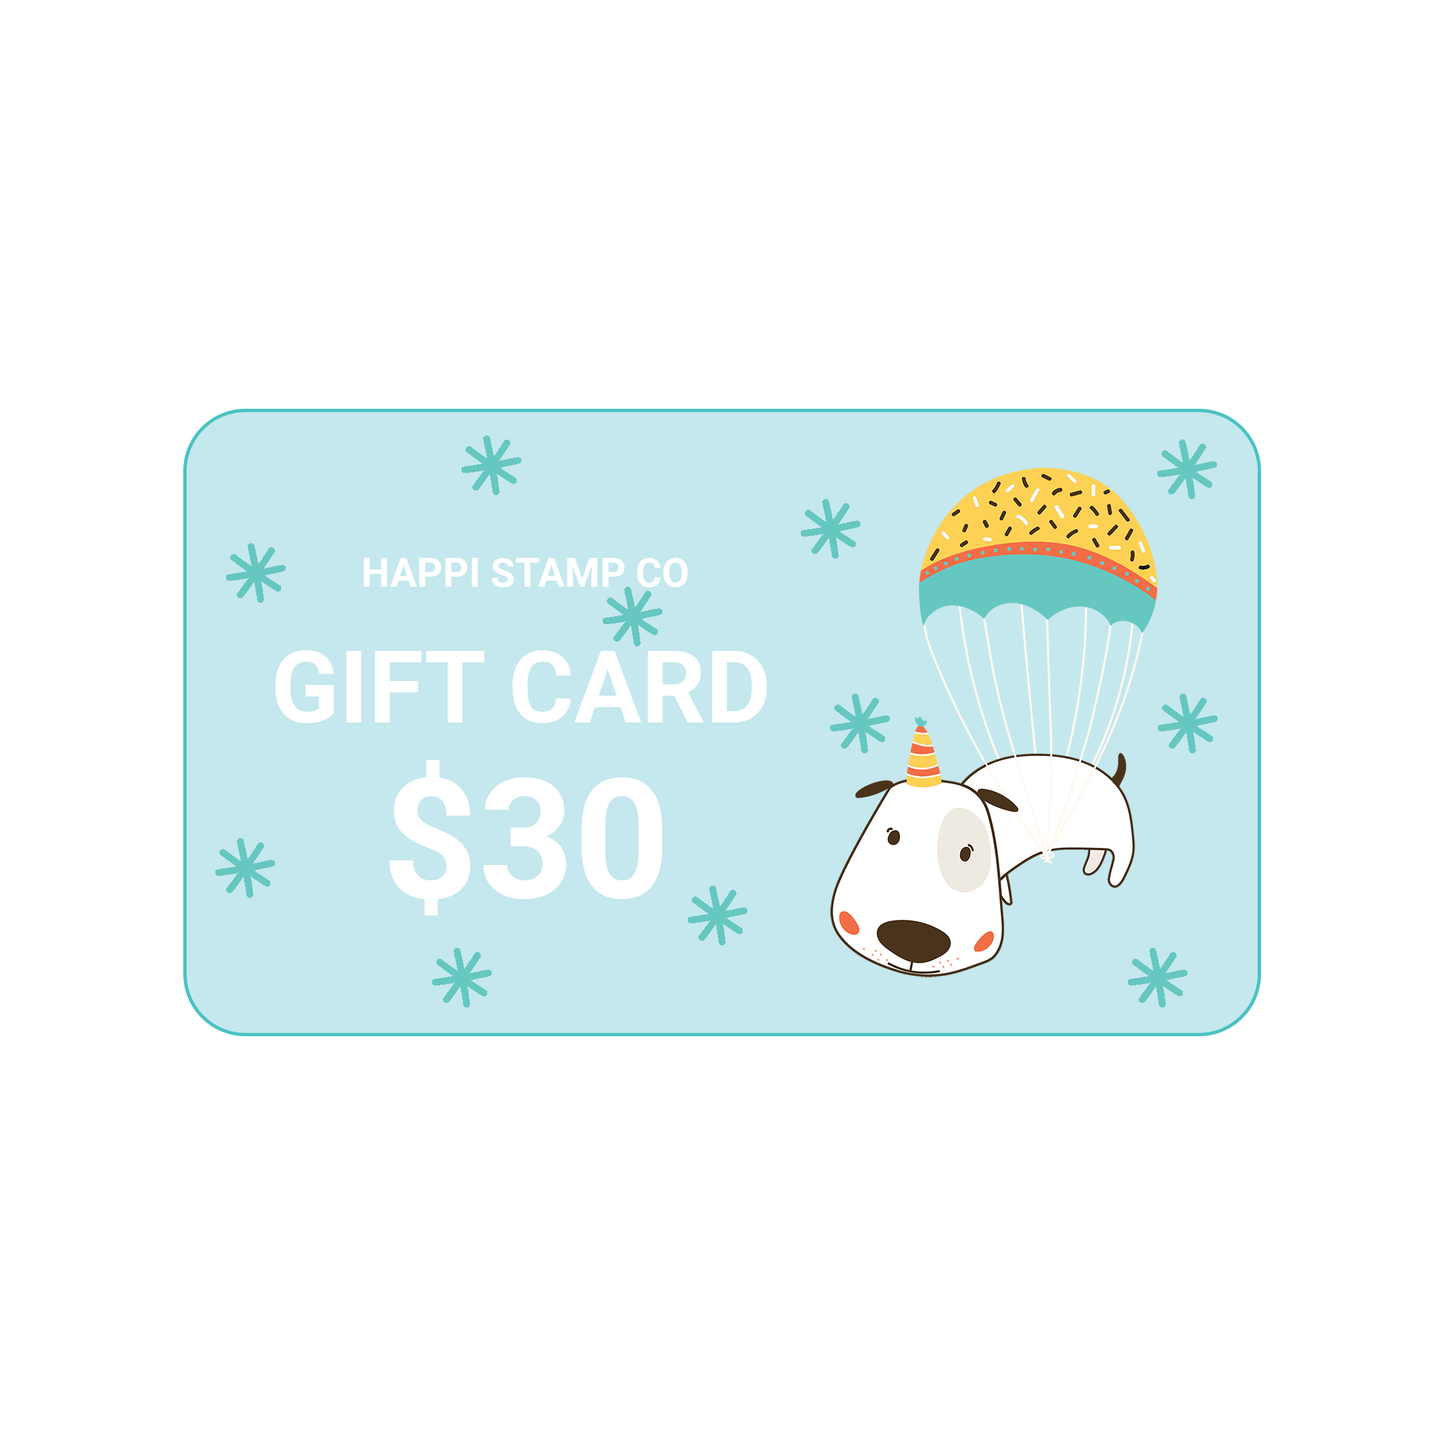 Gift Card $30